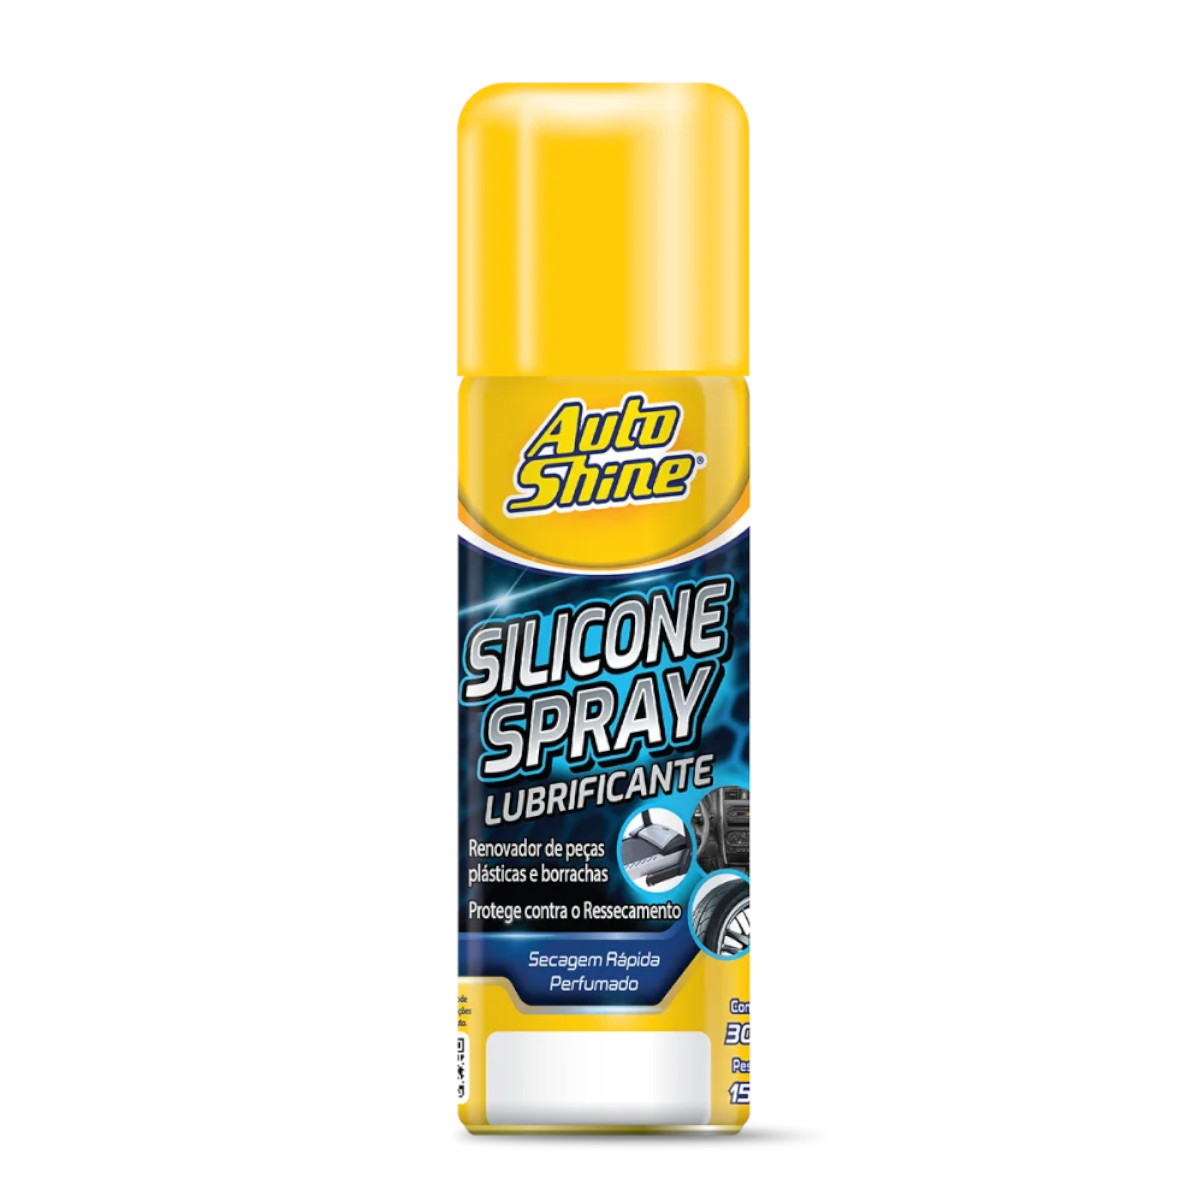 Silicone Spray 300ml Lavanda Autoshine                                  